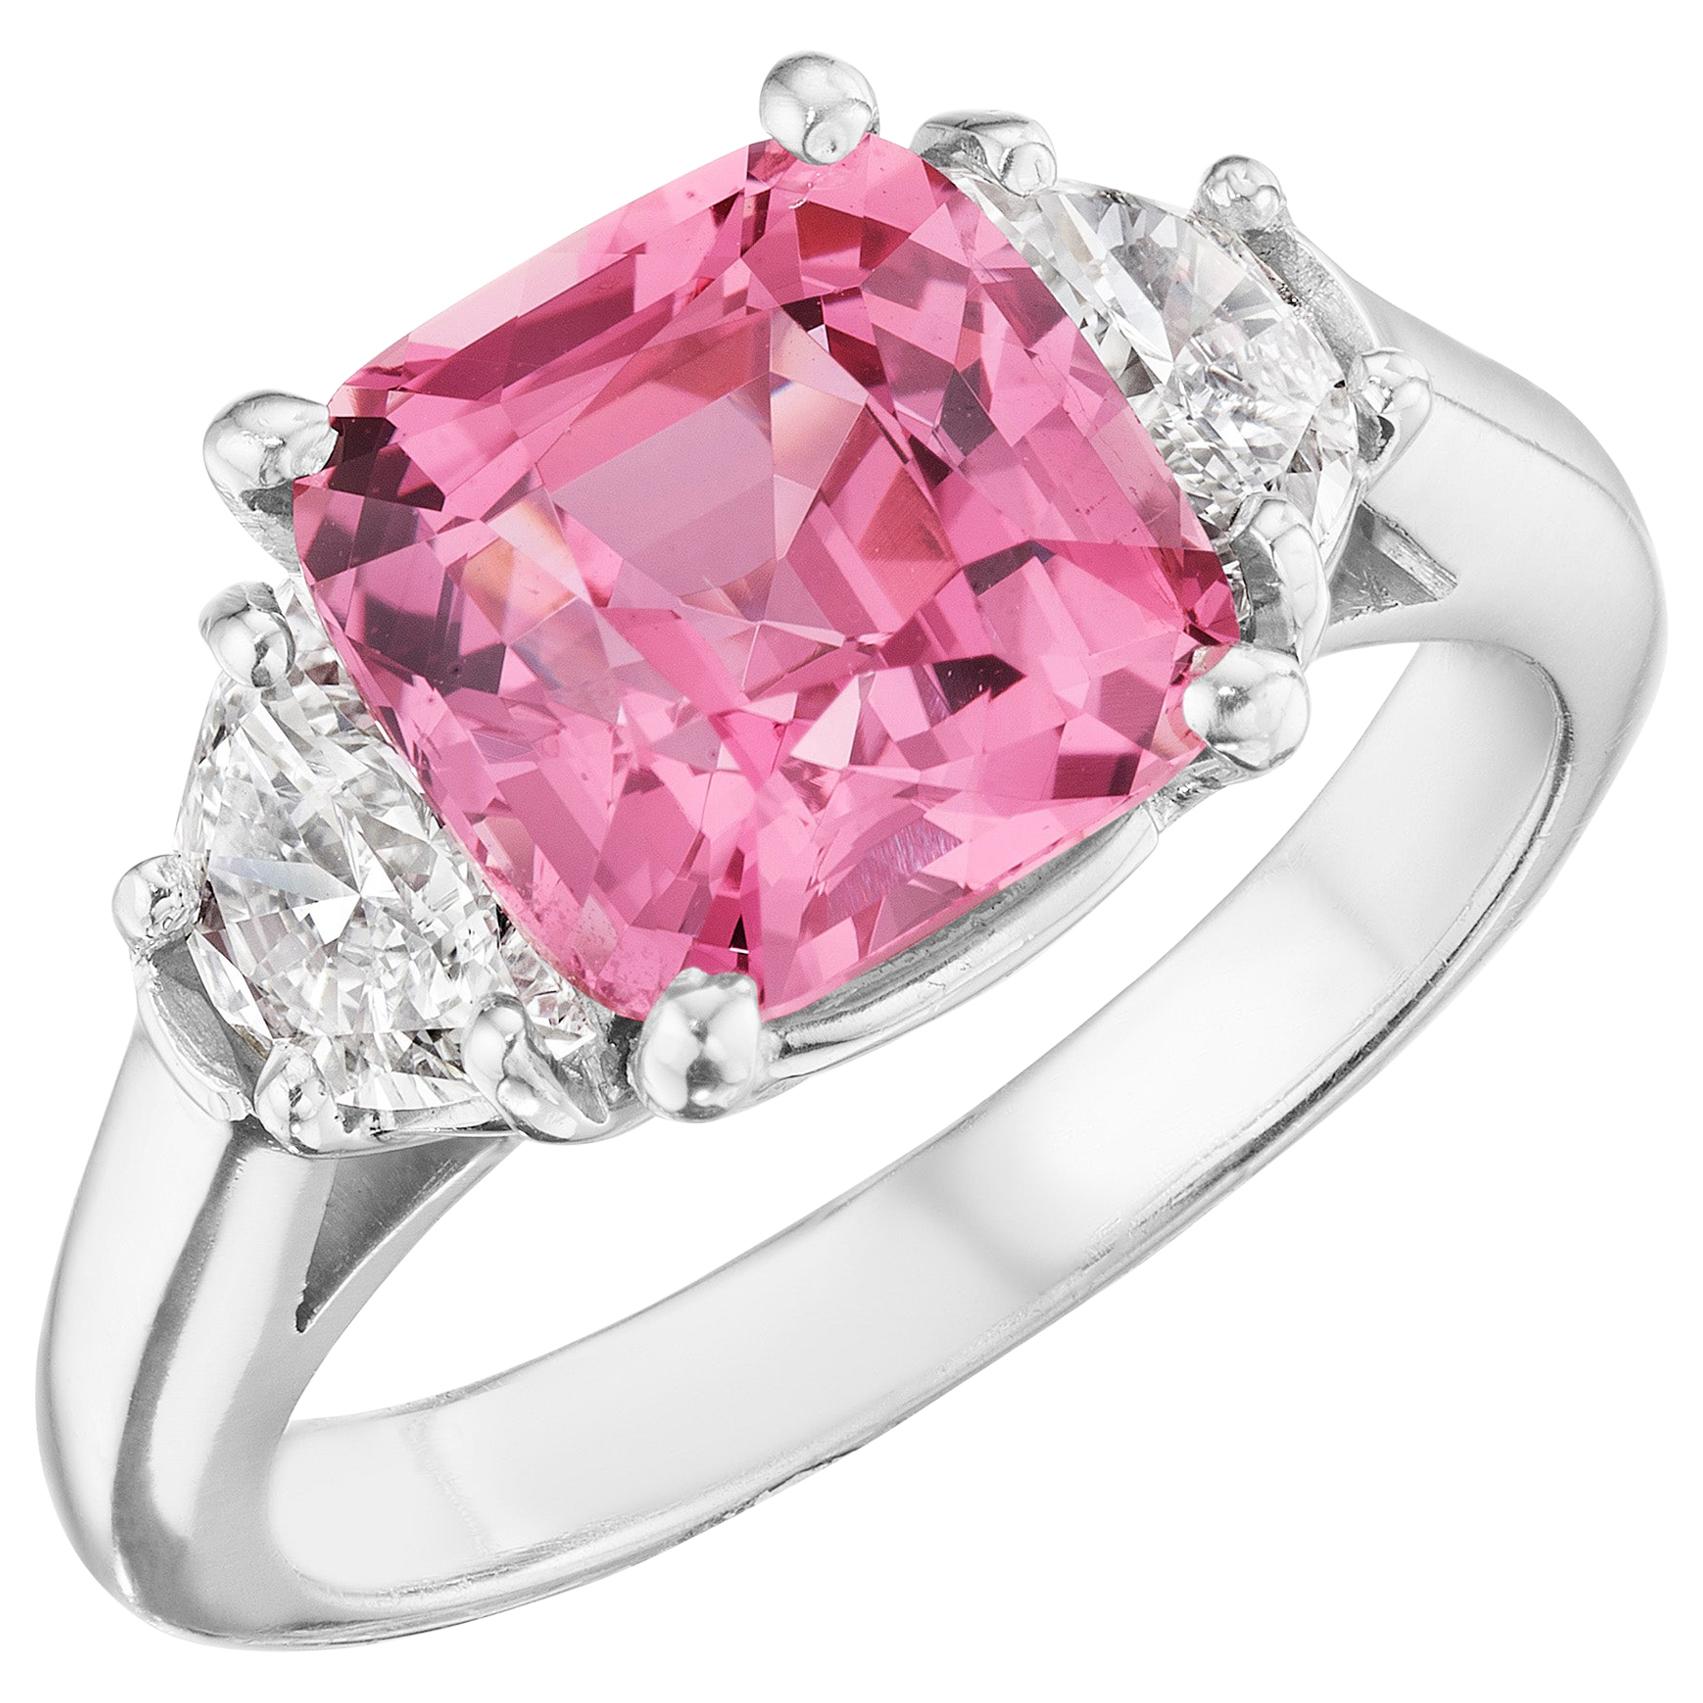 GIA Certified 3.95 Carat Natural Pink Sapphire Ring in Platinum